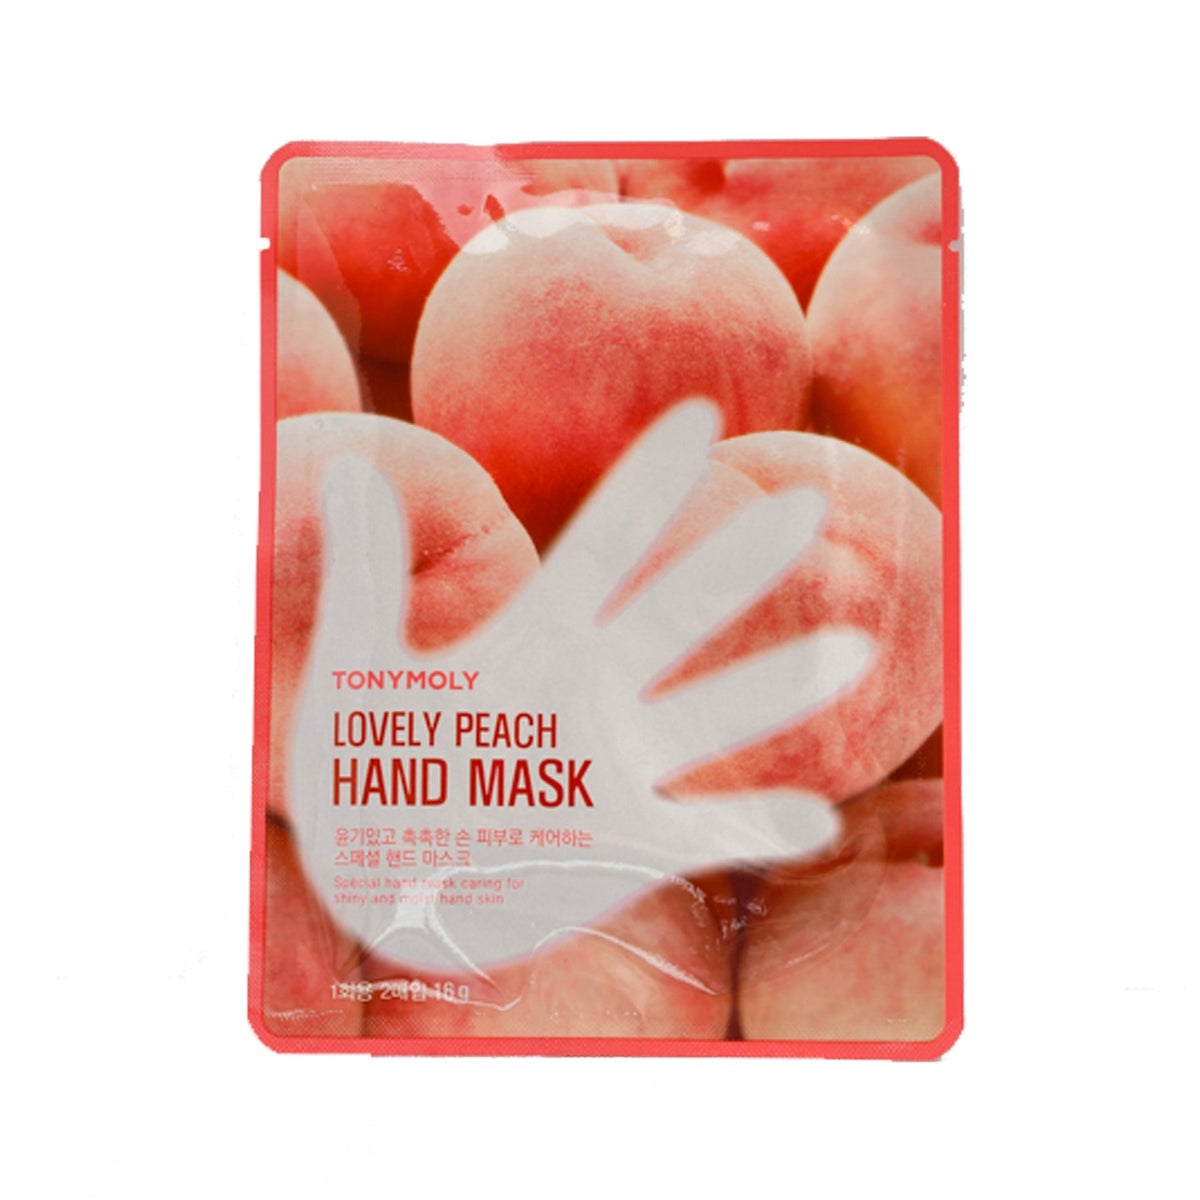 Lovely Peach Hand Mask Tonymoly